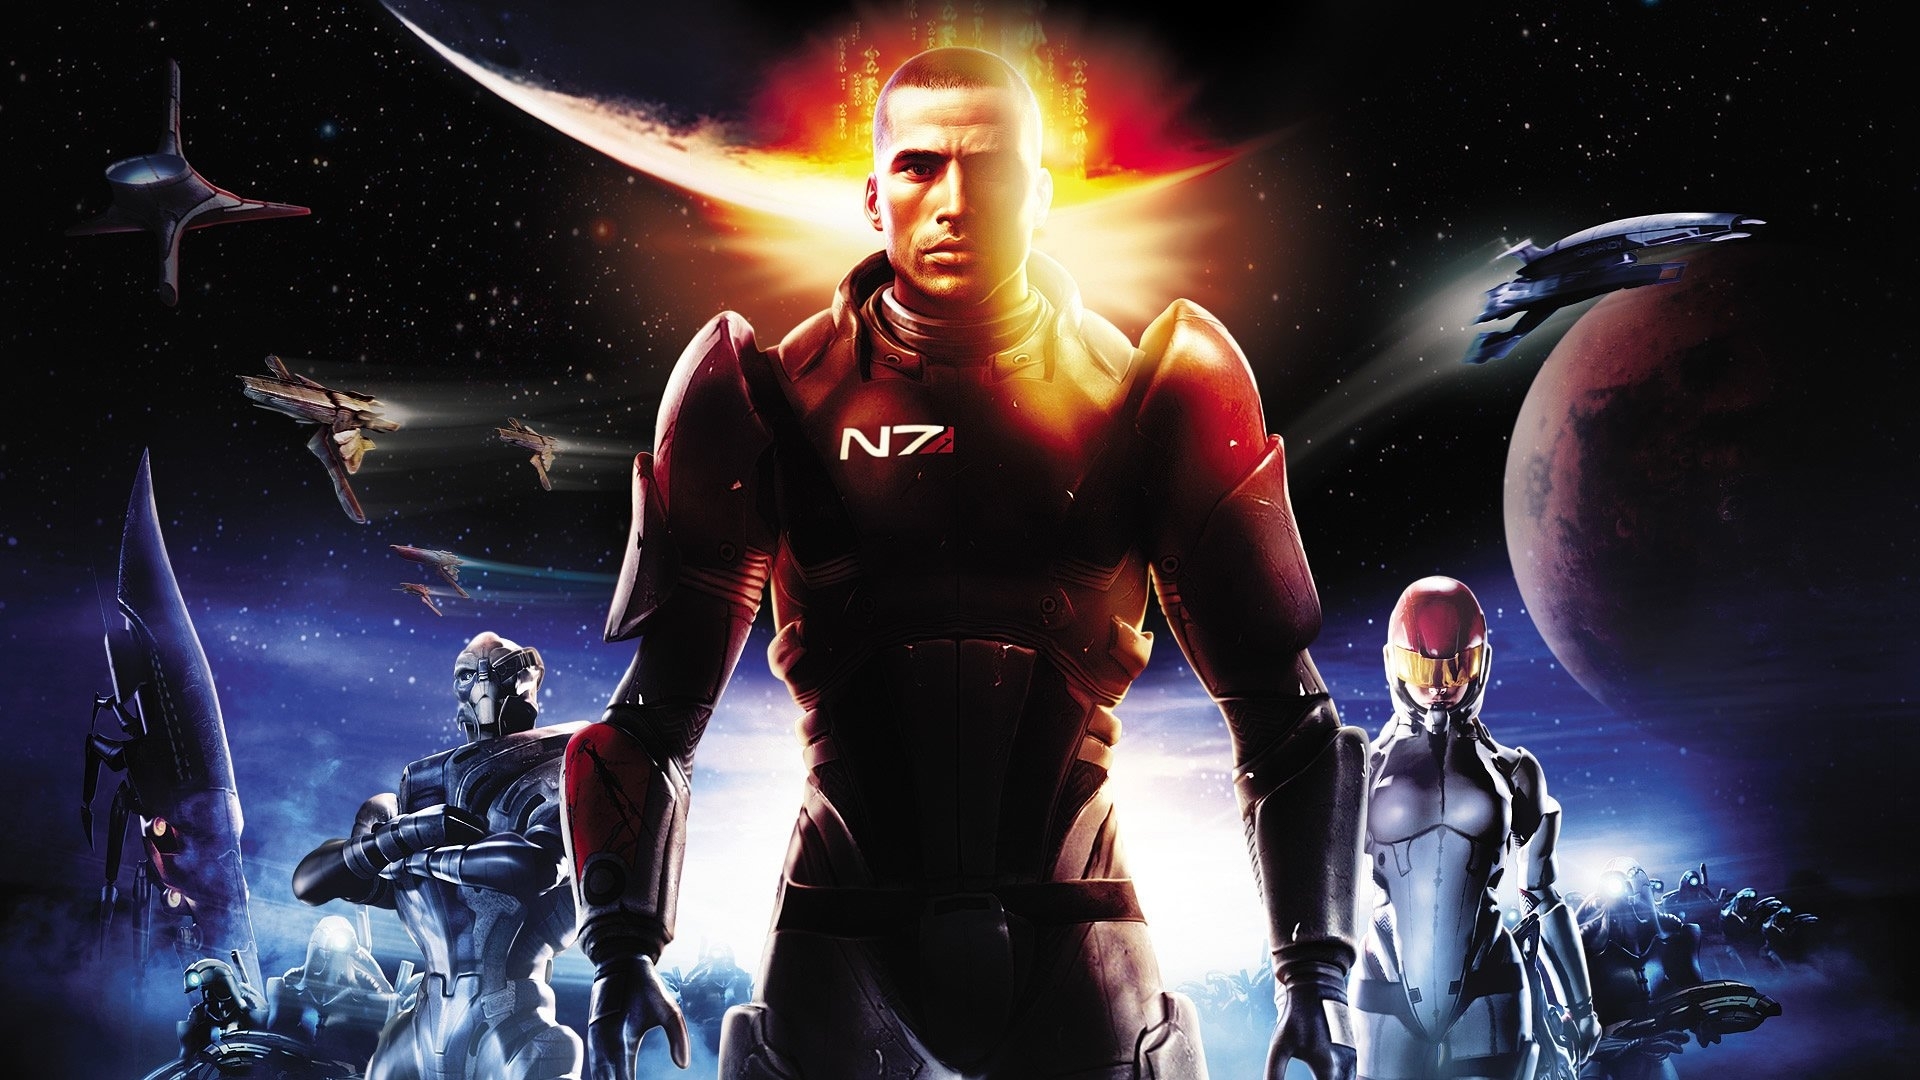 10 Best Mass Effect 1 Wallpaper FULL HD 1080p For PC Background